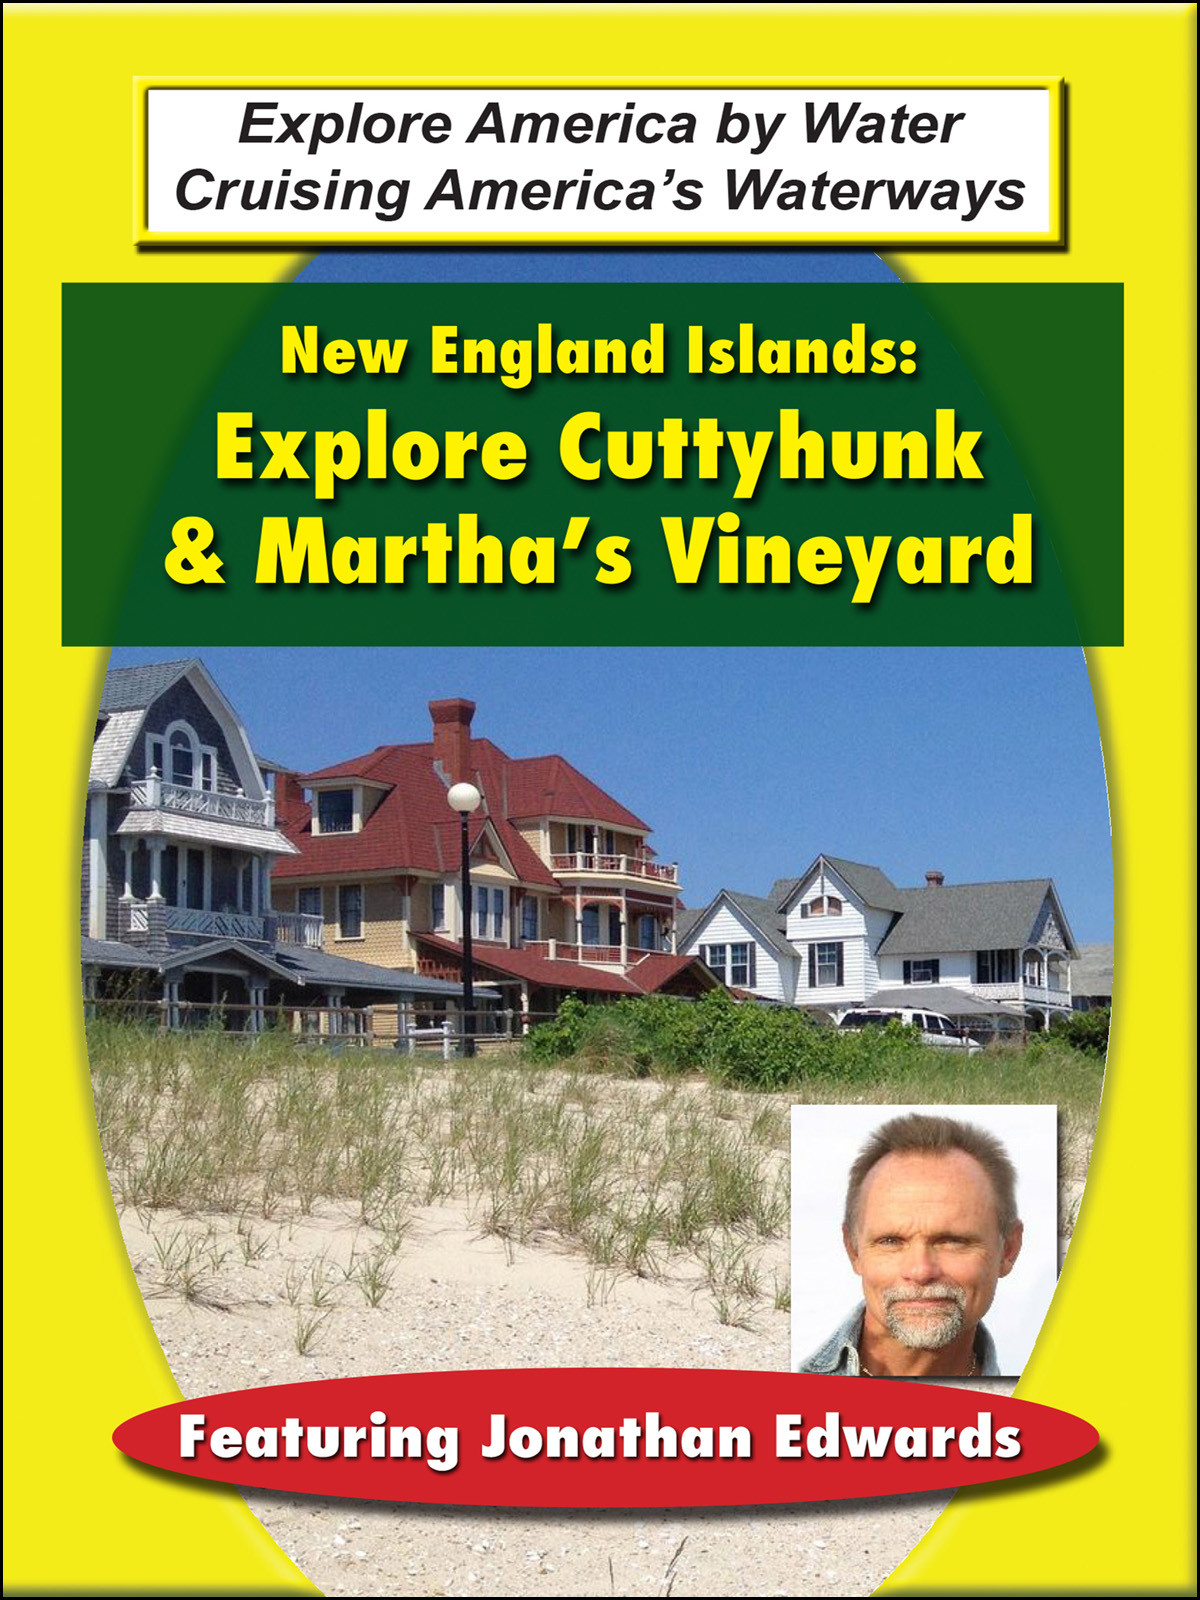 T8915 - New England Islands Small Ship Cruising - Explore Cuttyhunk & Martha's Vineyard